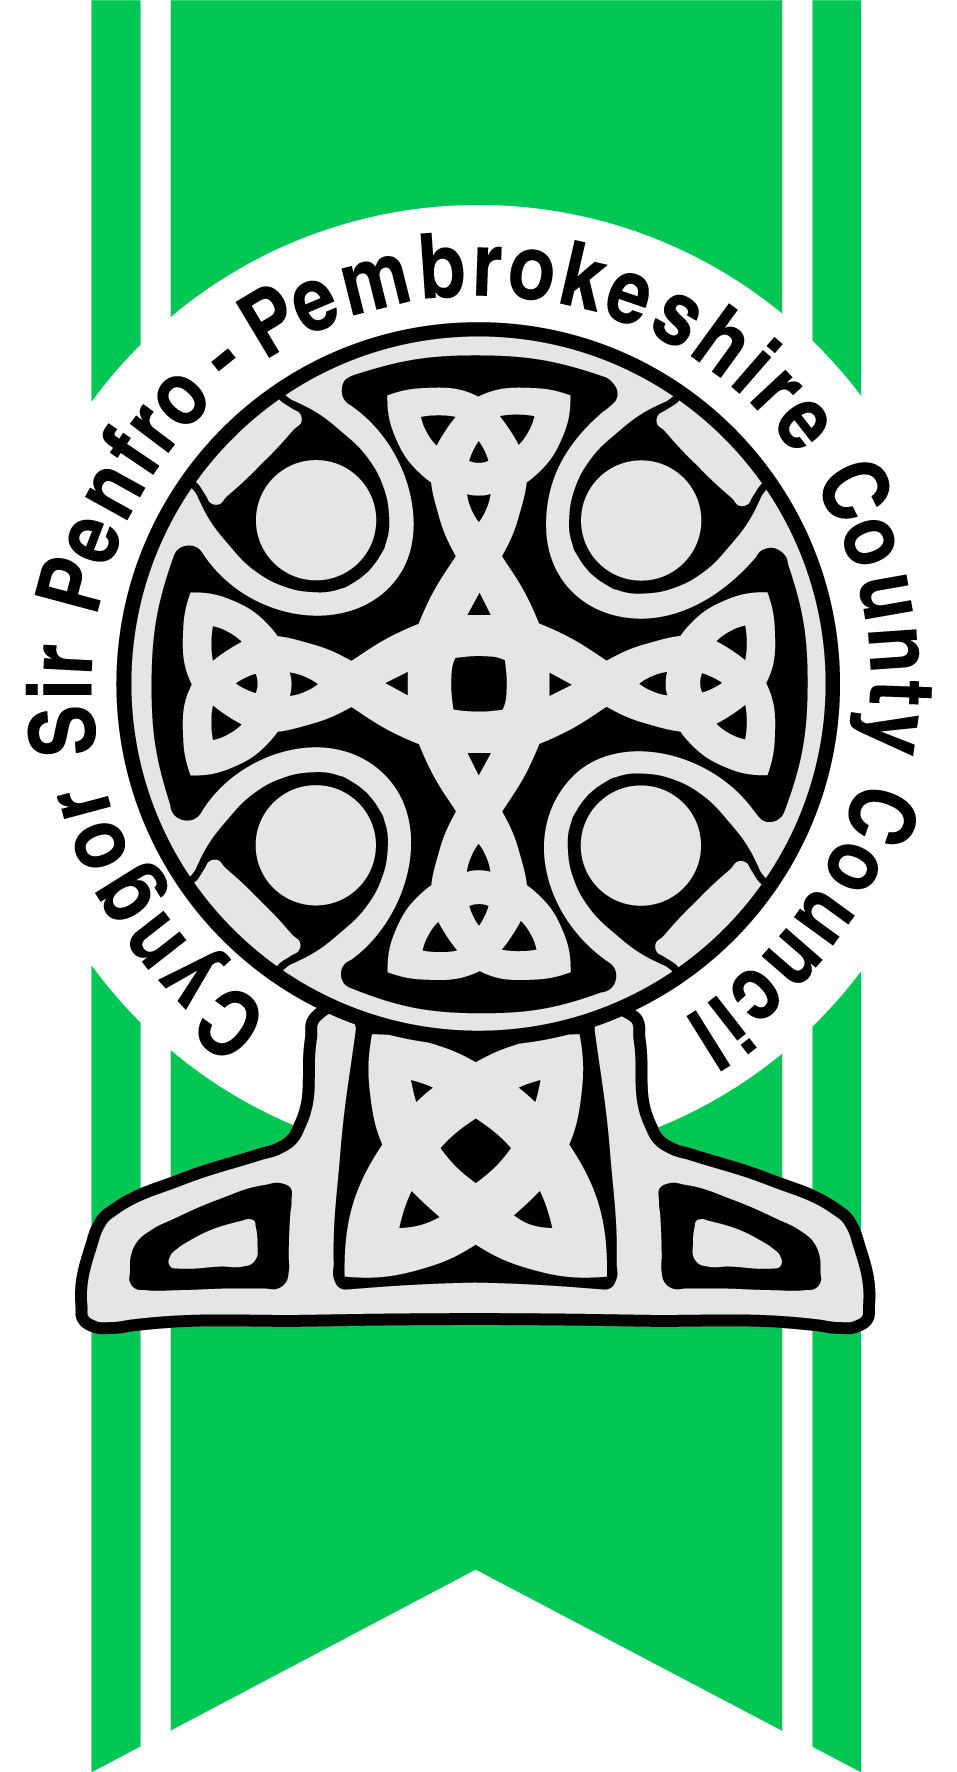 Pcc logo